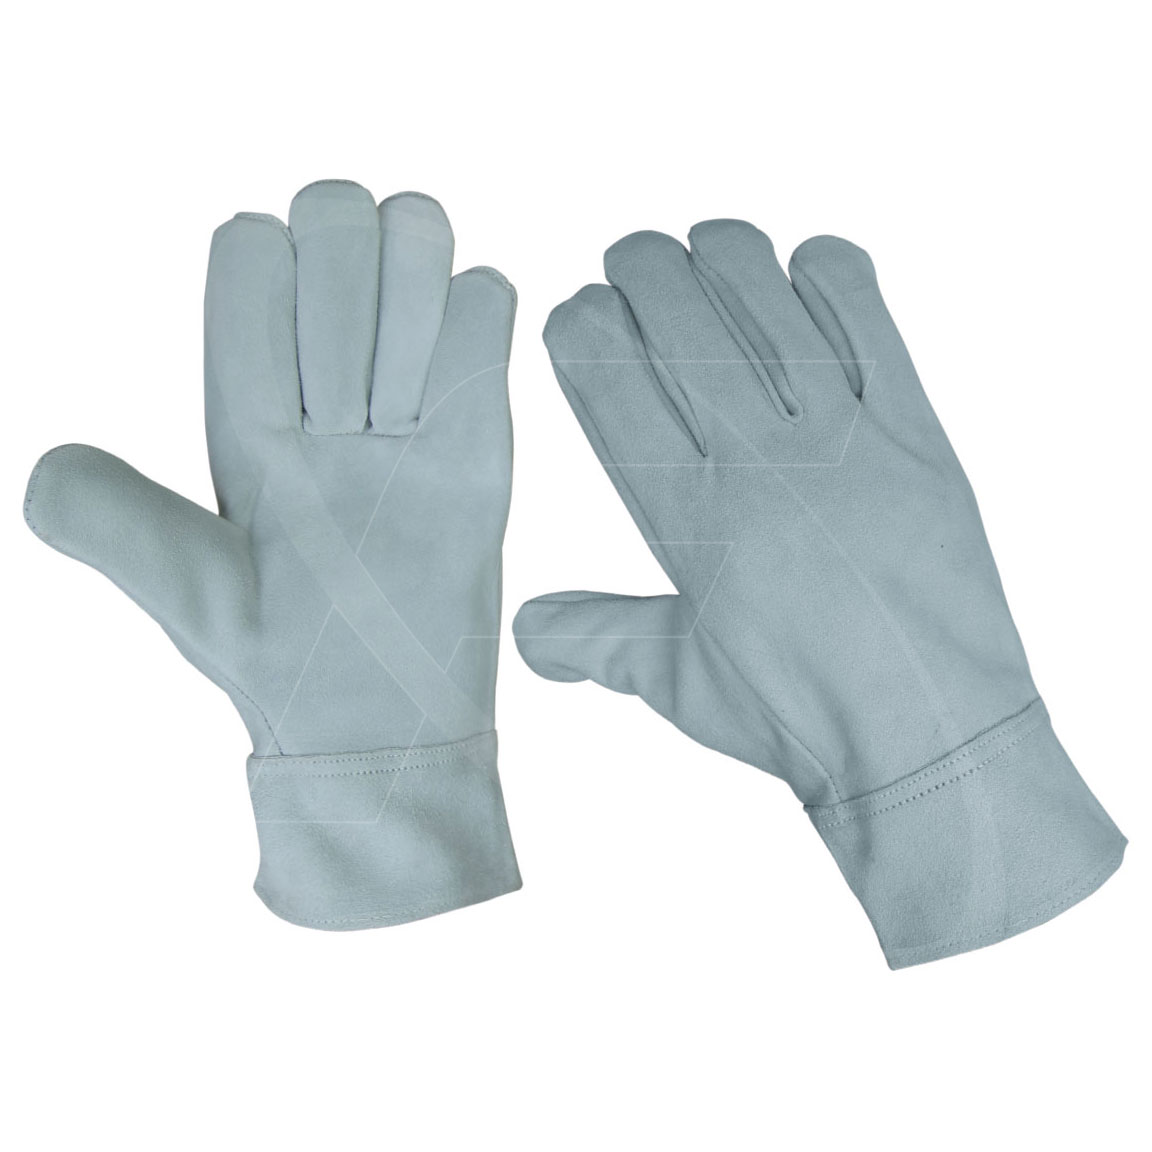 Welding Gloves in Cowhide Split Leather / Safety Argon Gloves